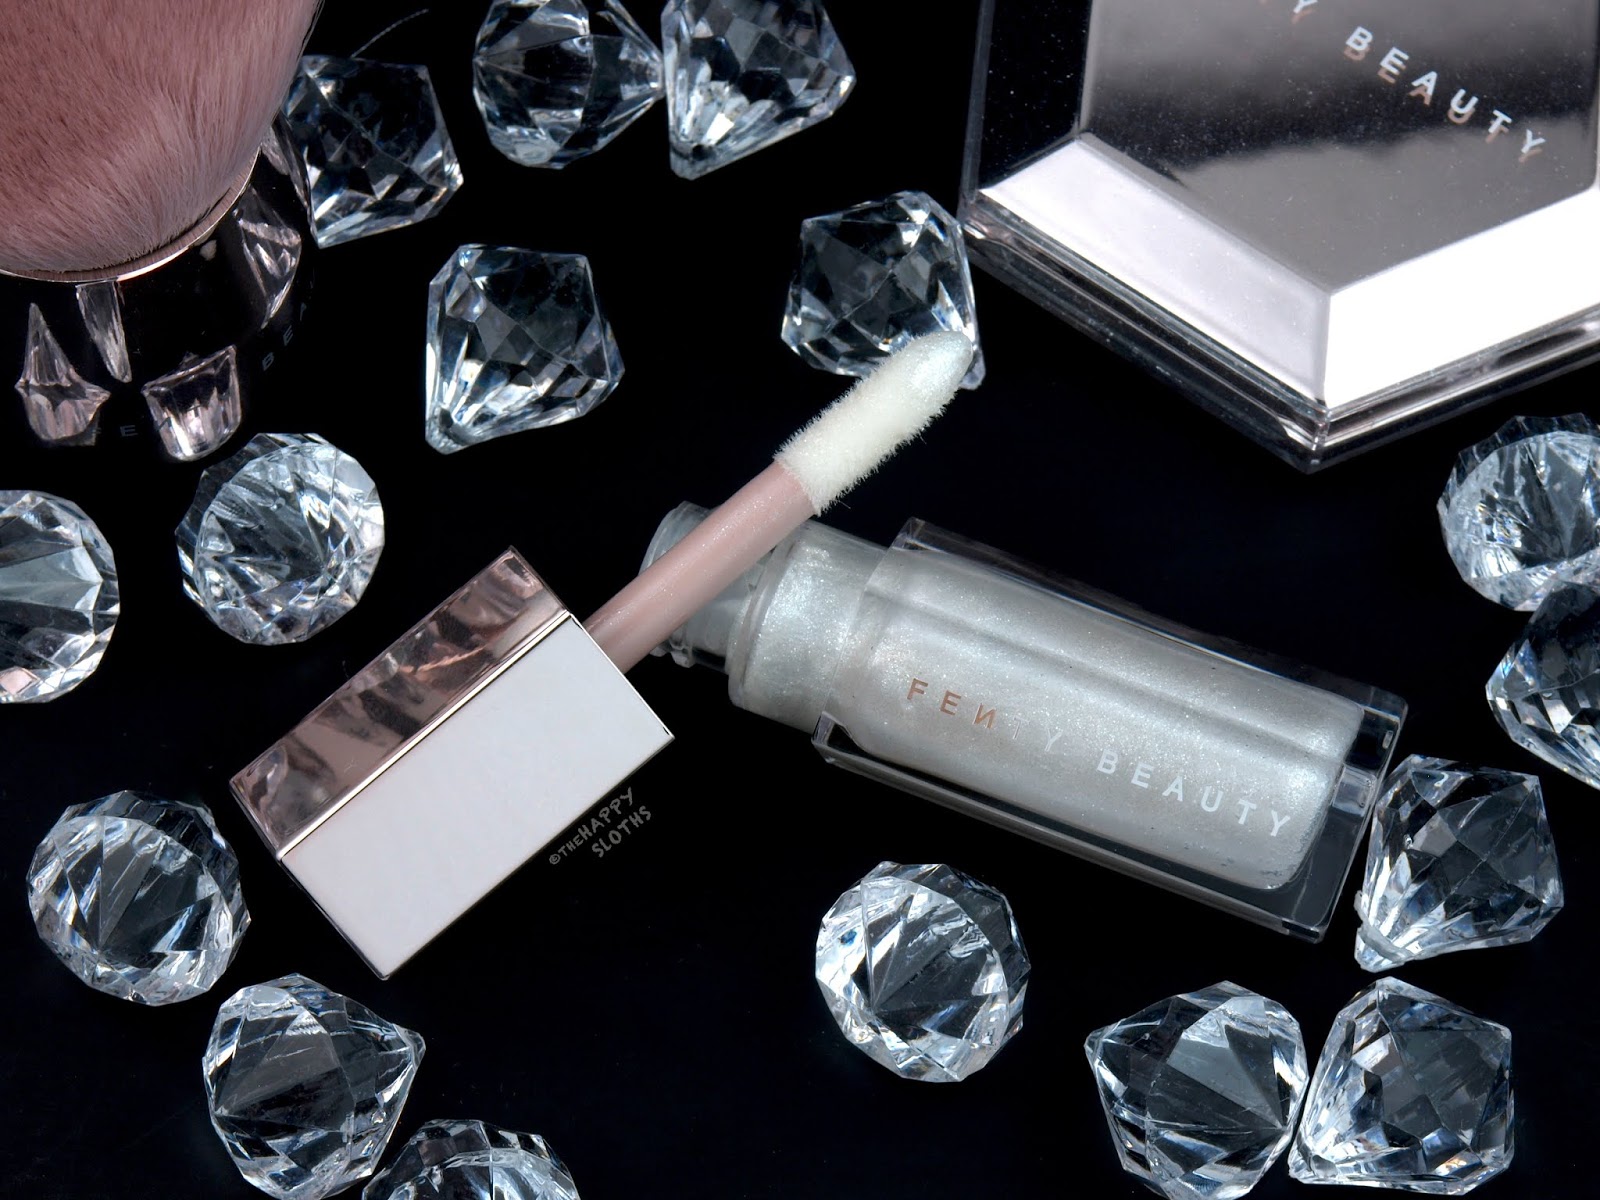 Fenty Beauty by Rihanna | Gloss Bomb Universal Lip Luminizer in "Diamond Milk": Review and Swatches